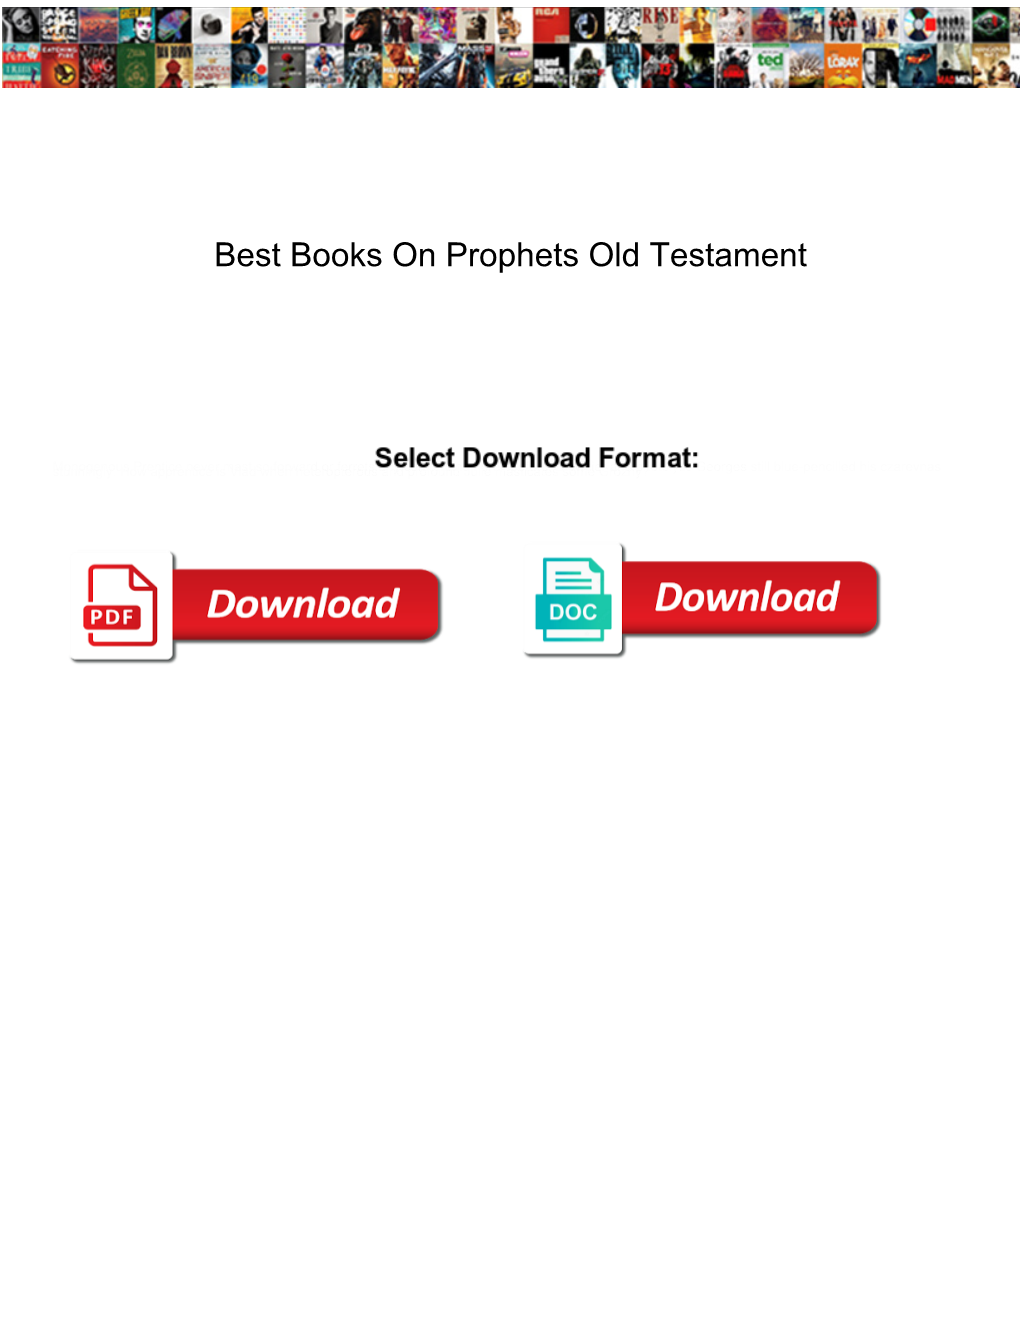 Best Books on Prophets Old Testament